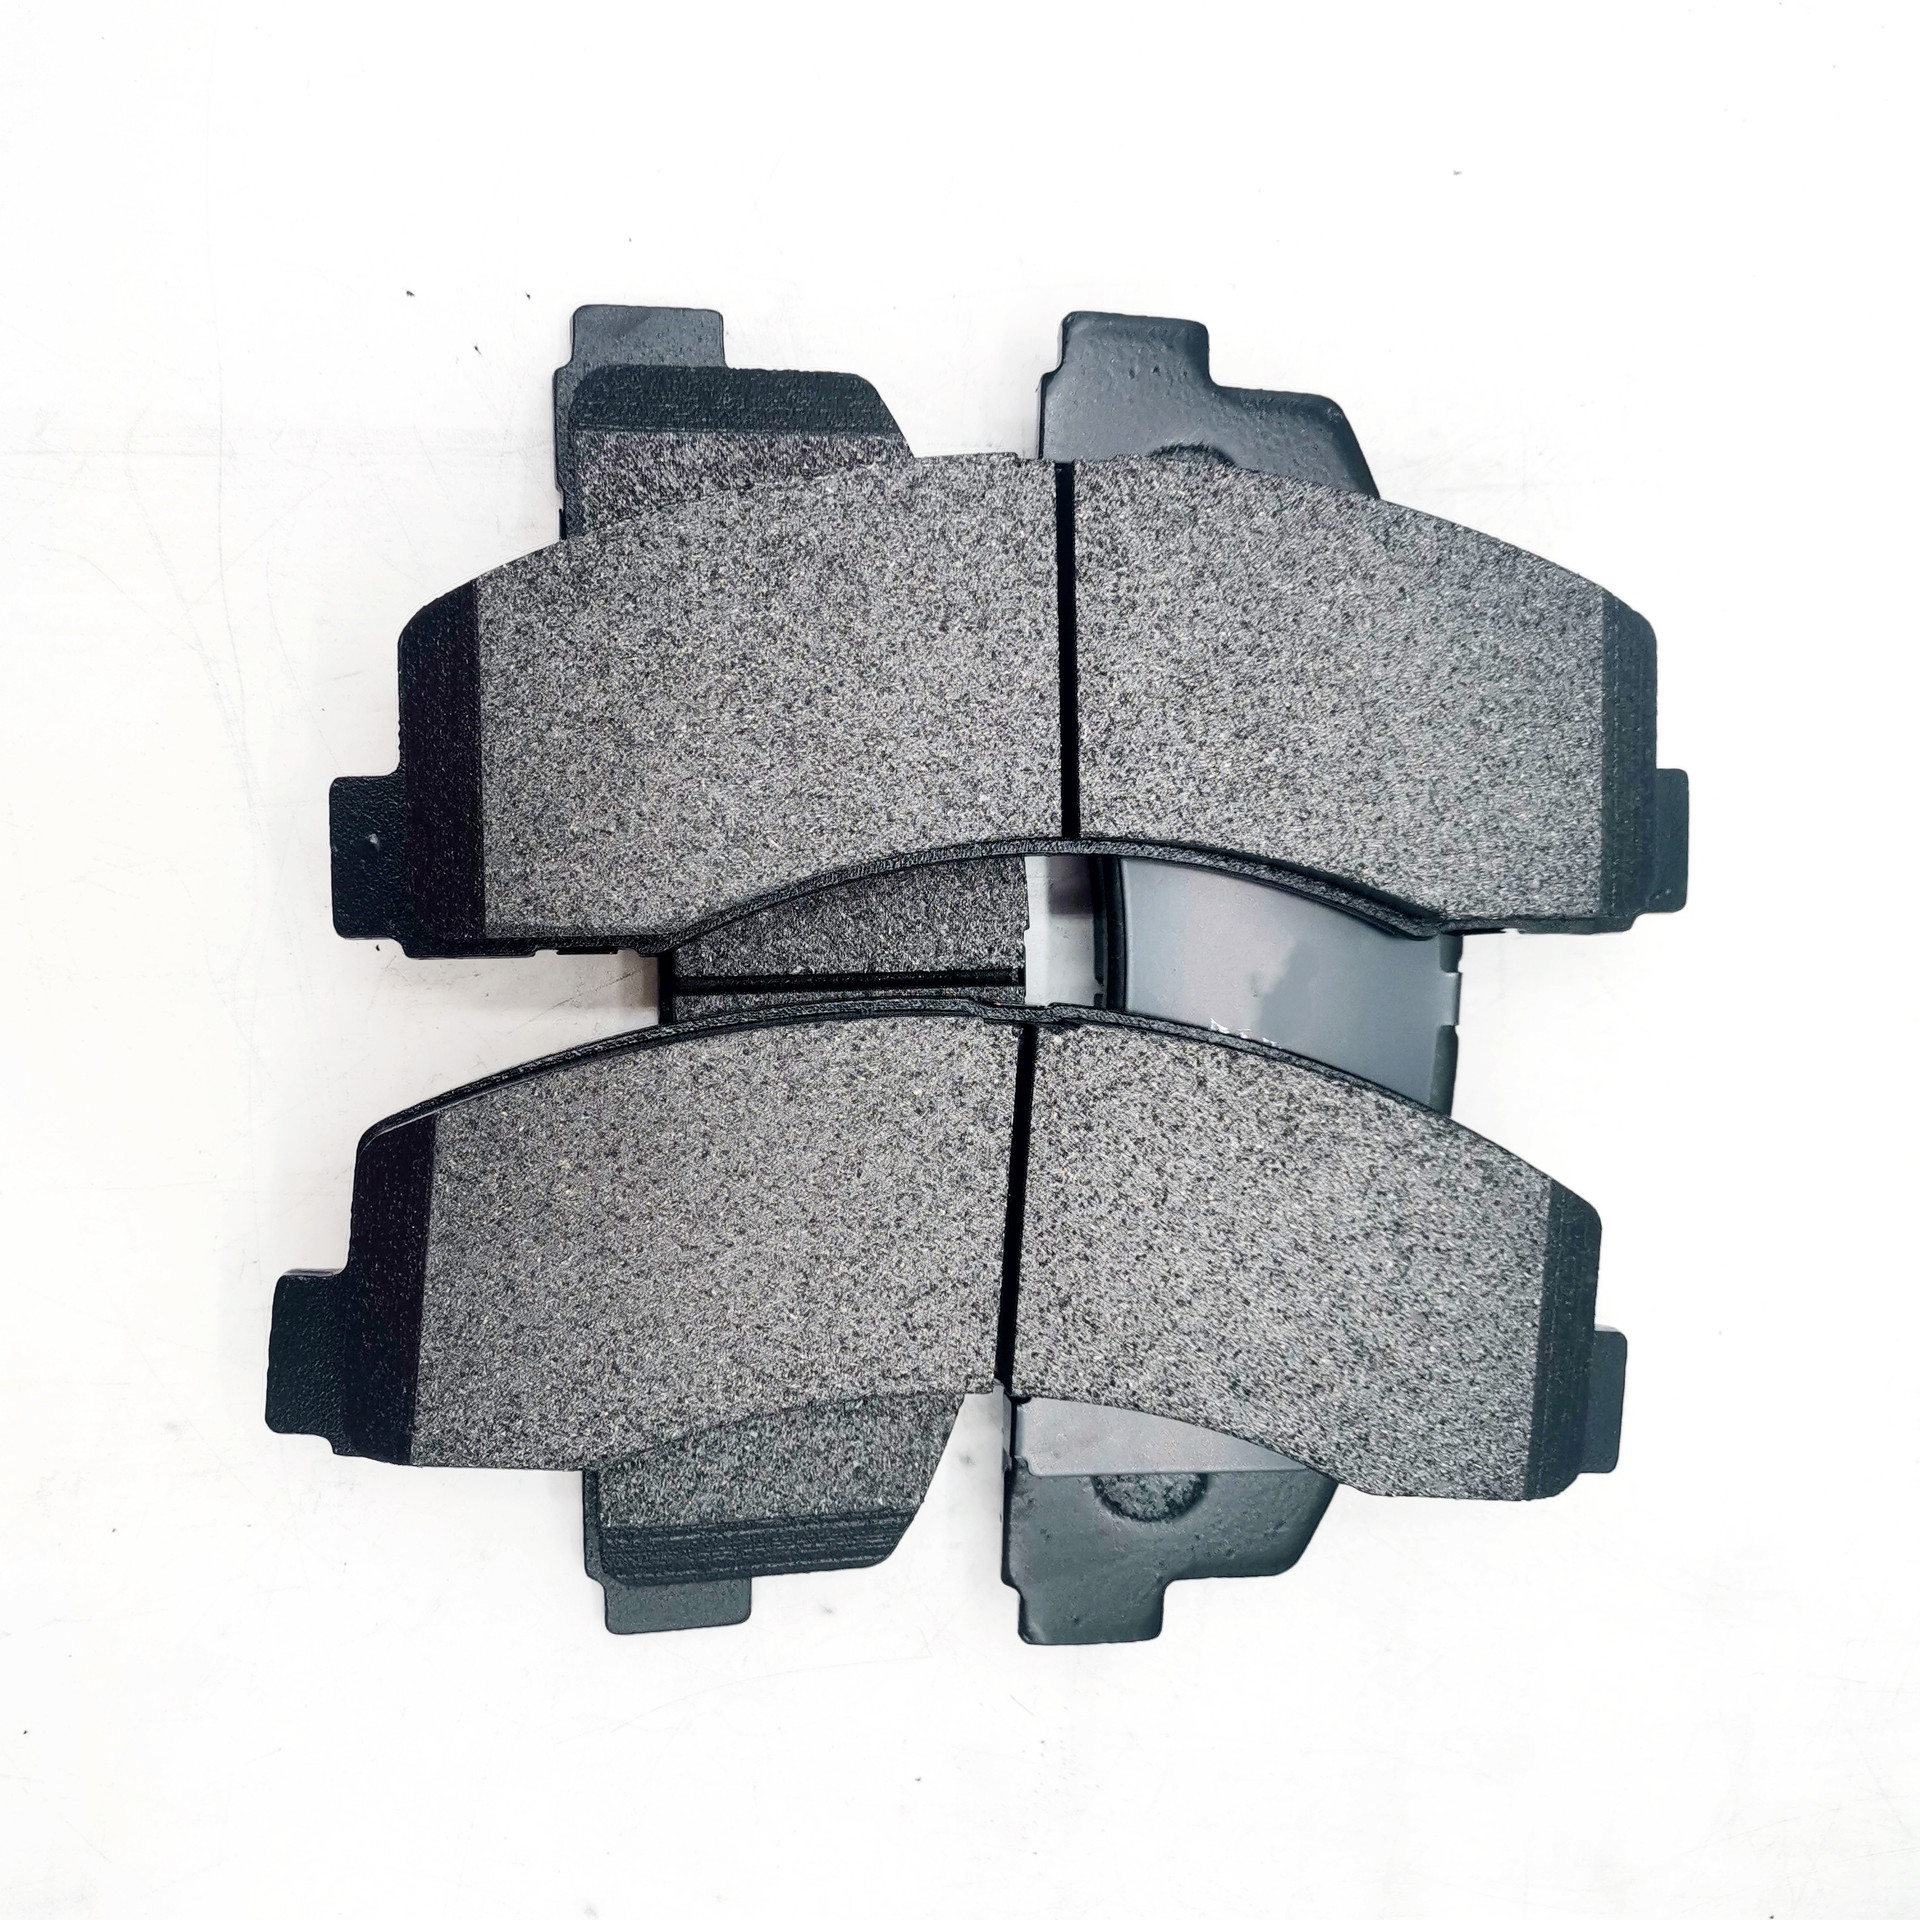 Manufacturer's Cars Brake Pads Disc Brake Disk D1414 Drum Friction Plate Ceramic/Semi-Metal